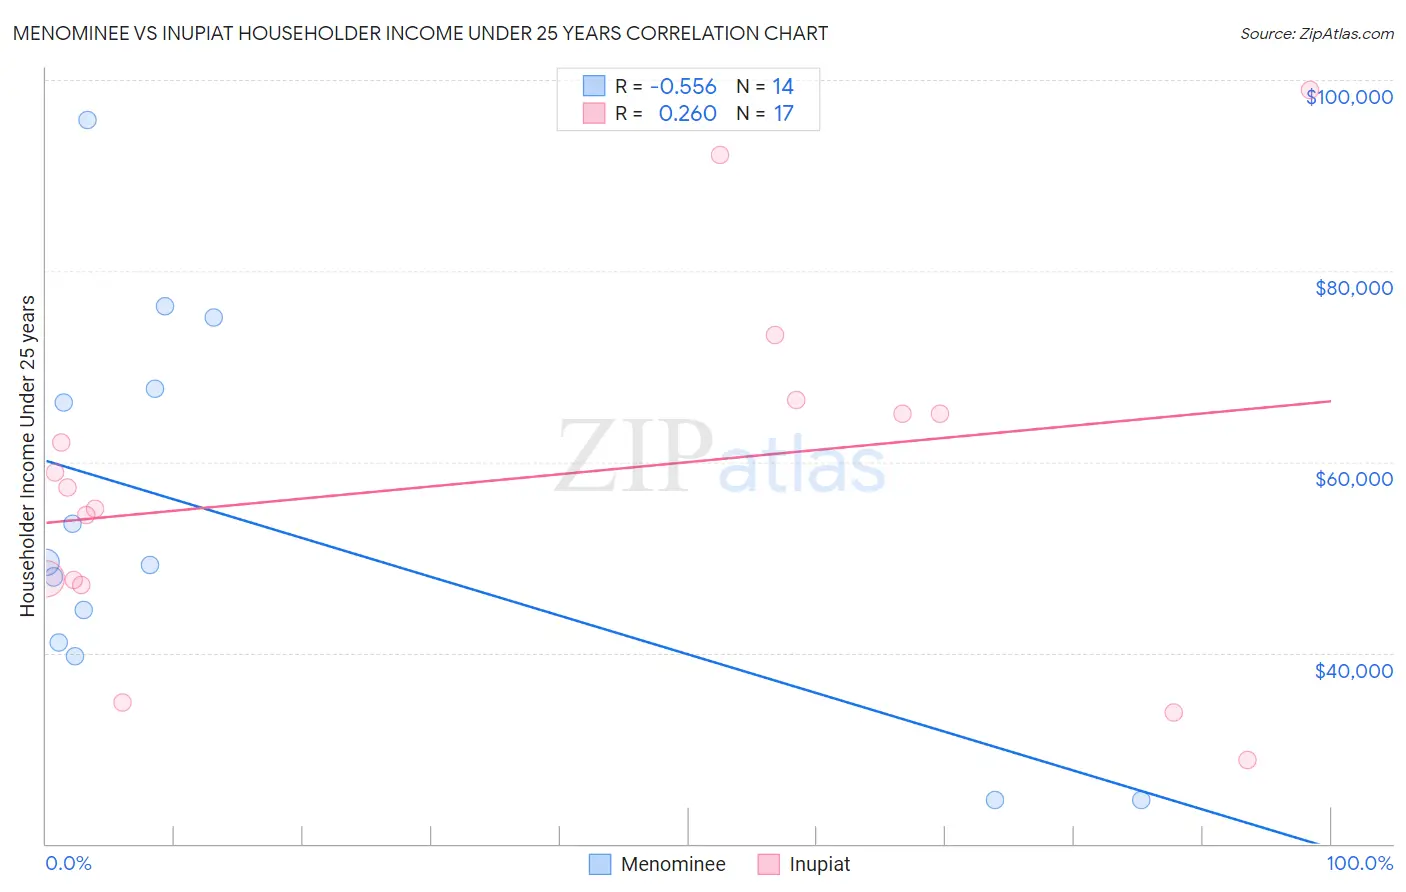 Menominee vs Inupiat Householder Income Under 25 years